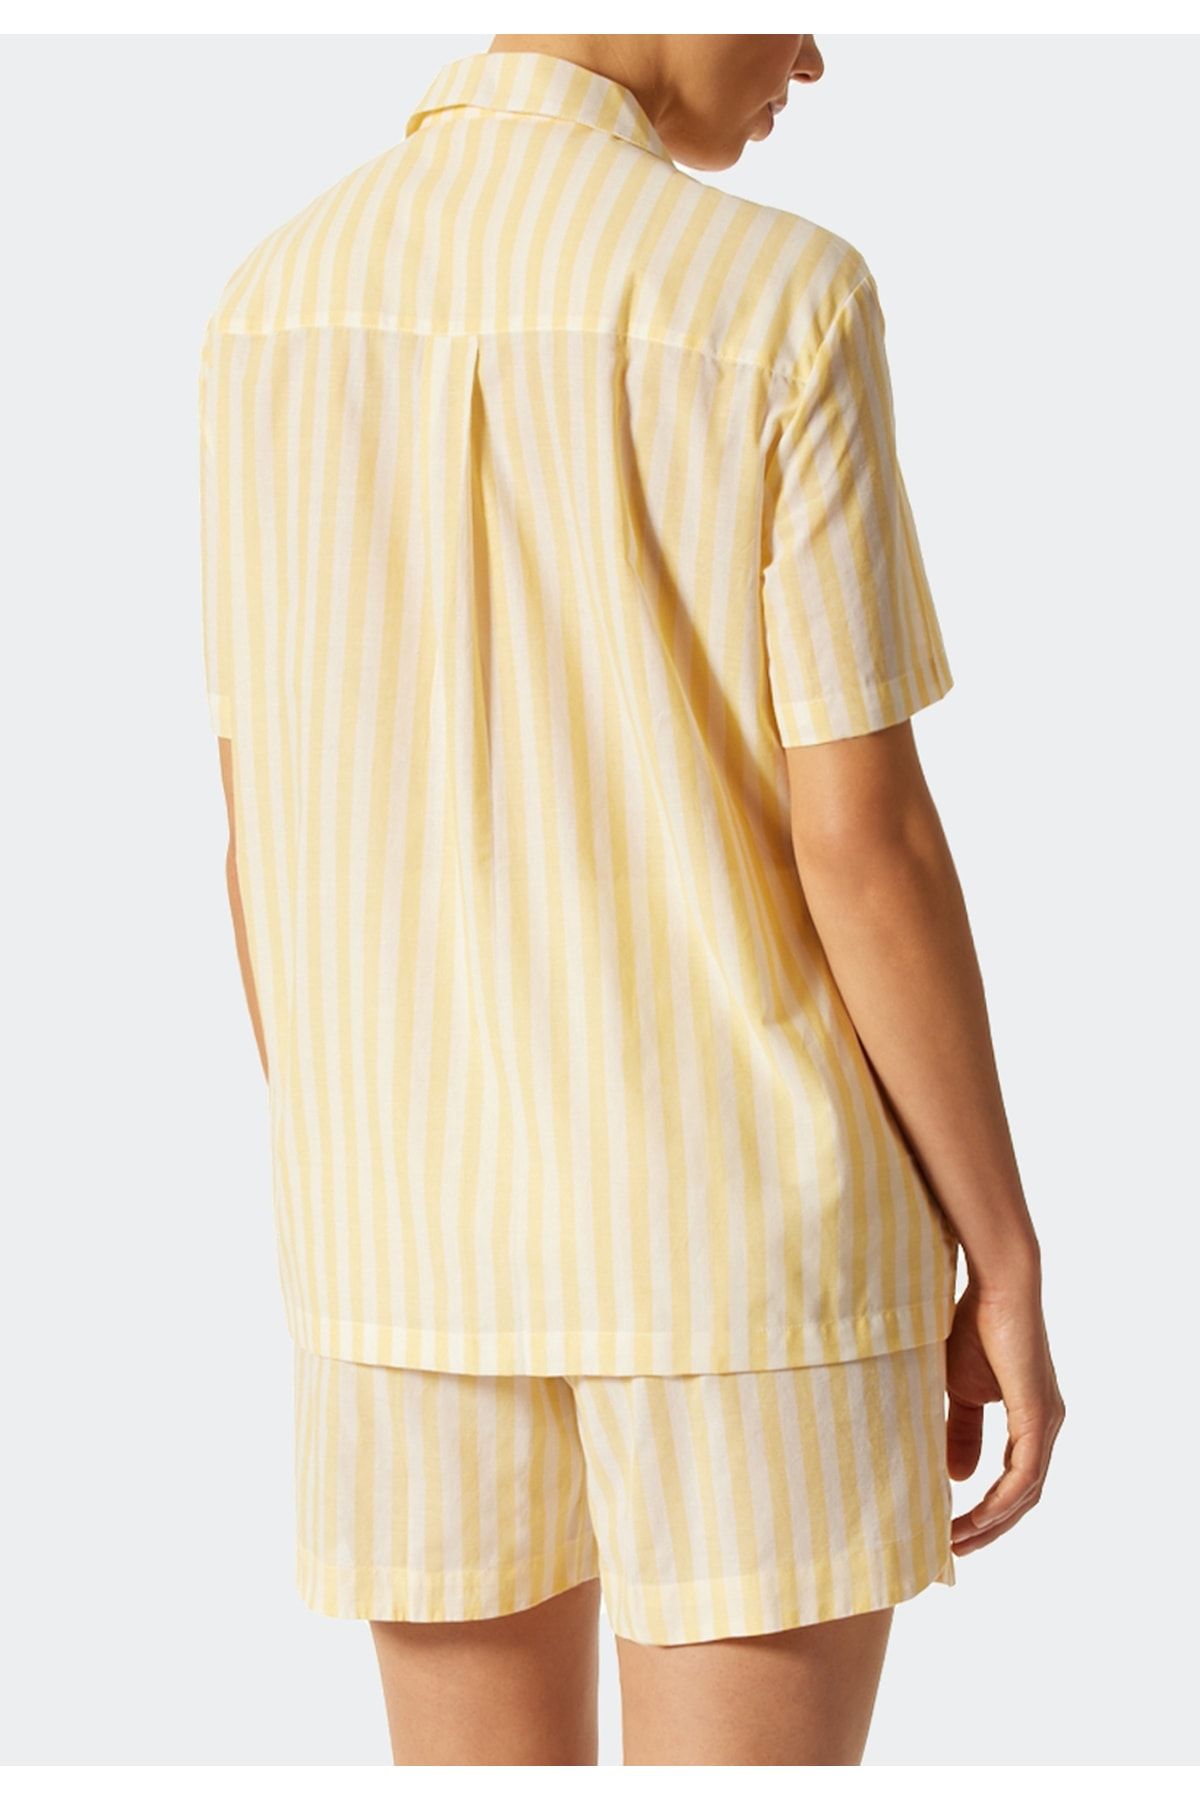 Schiesser Pyjama set - Gelb - Trendyol - Gestreift